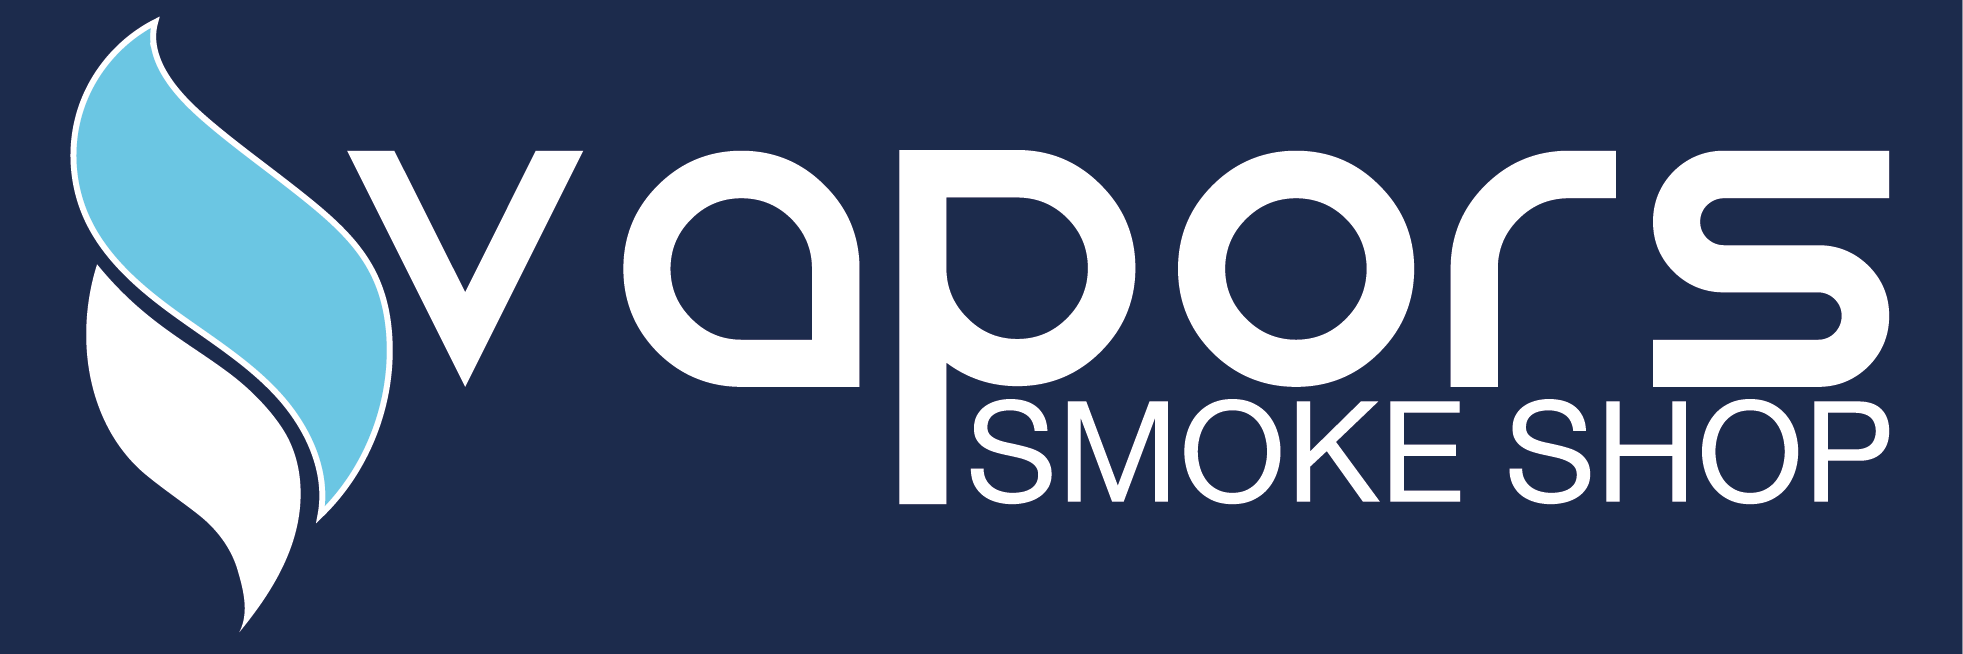 vapors SMOKE SHOP